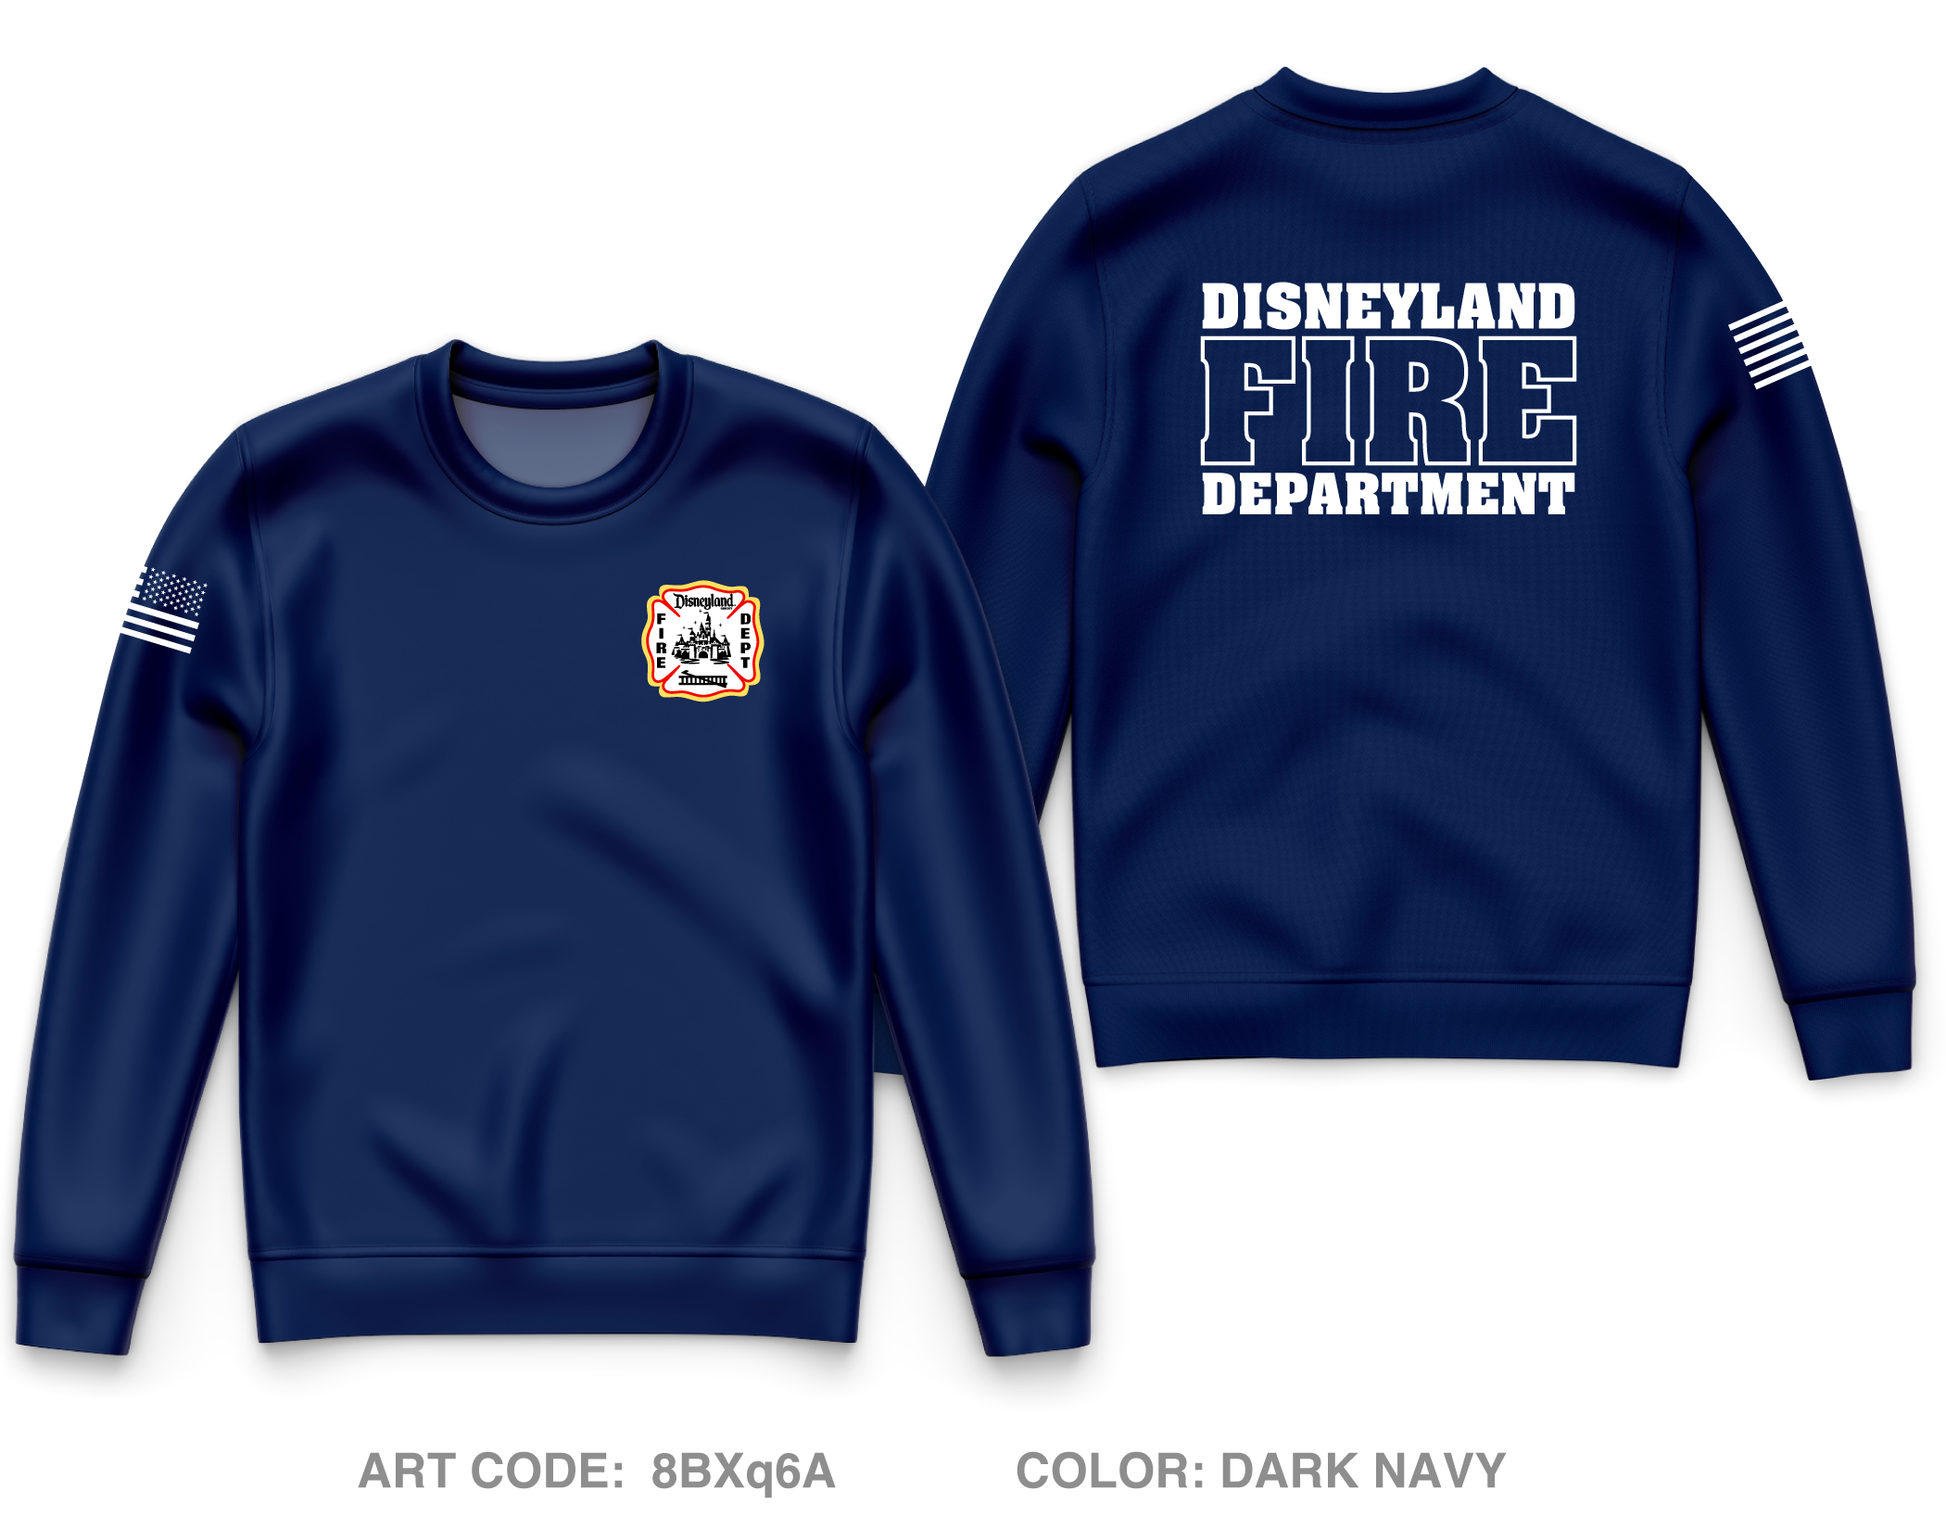 DLR FIRE Core Men's Crewneck Performance Sweatshirt - 8BXq6A